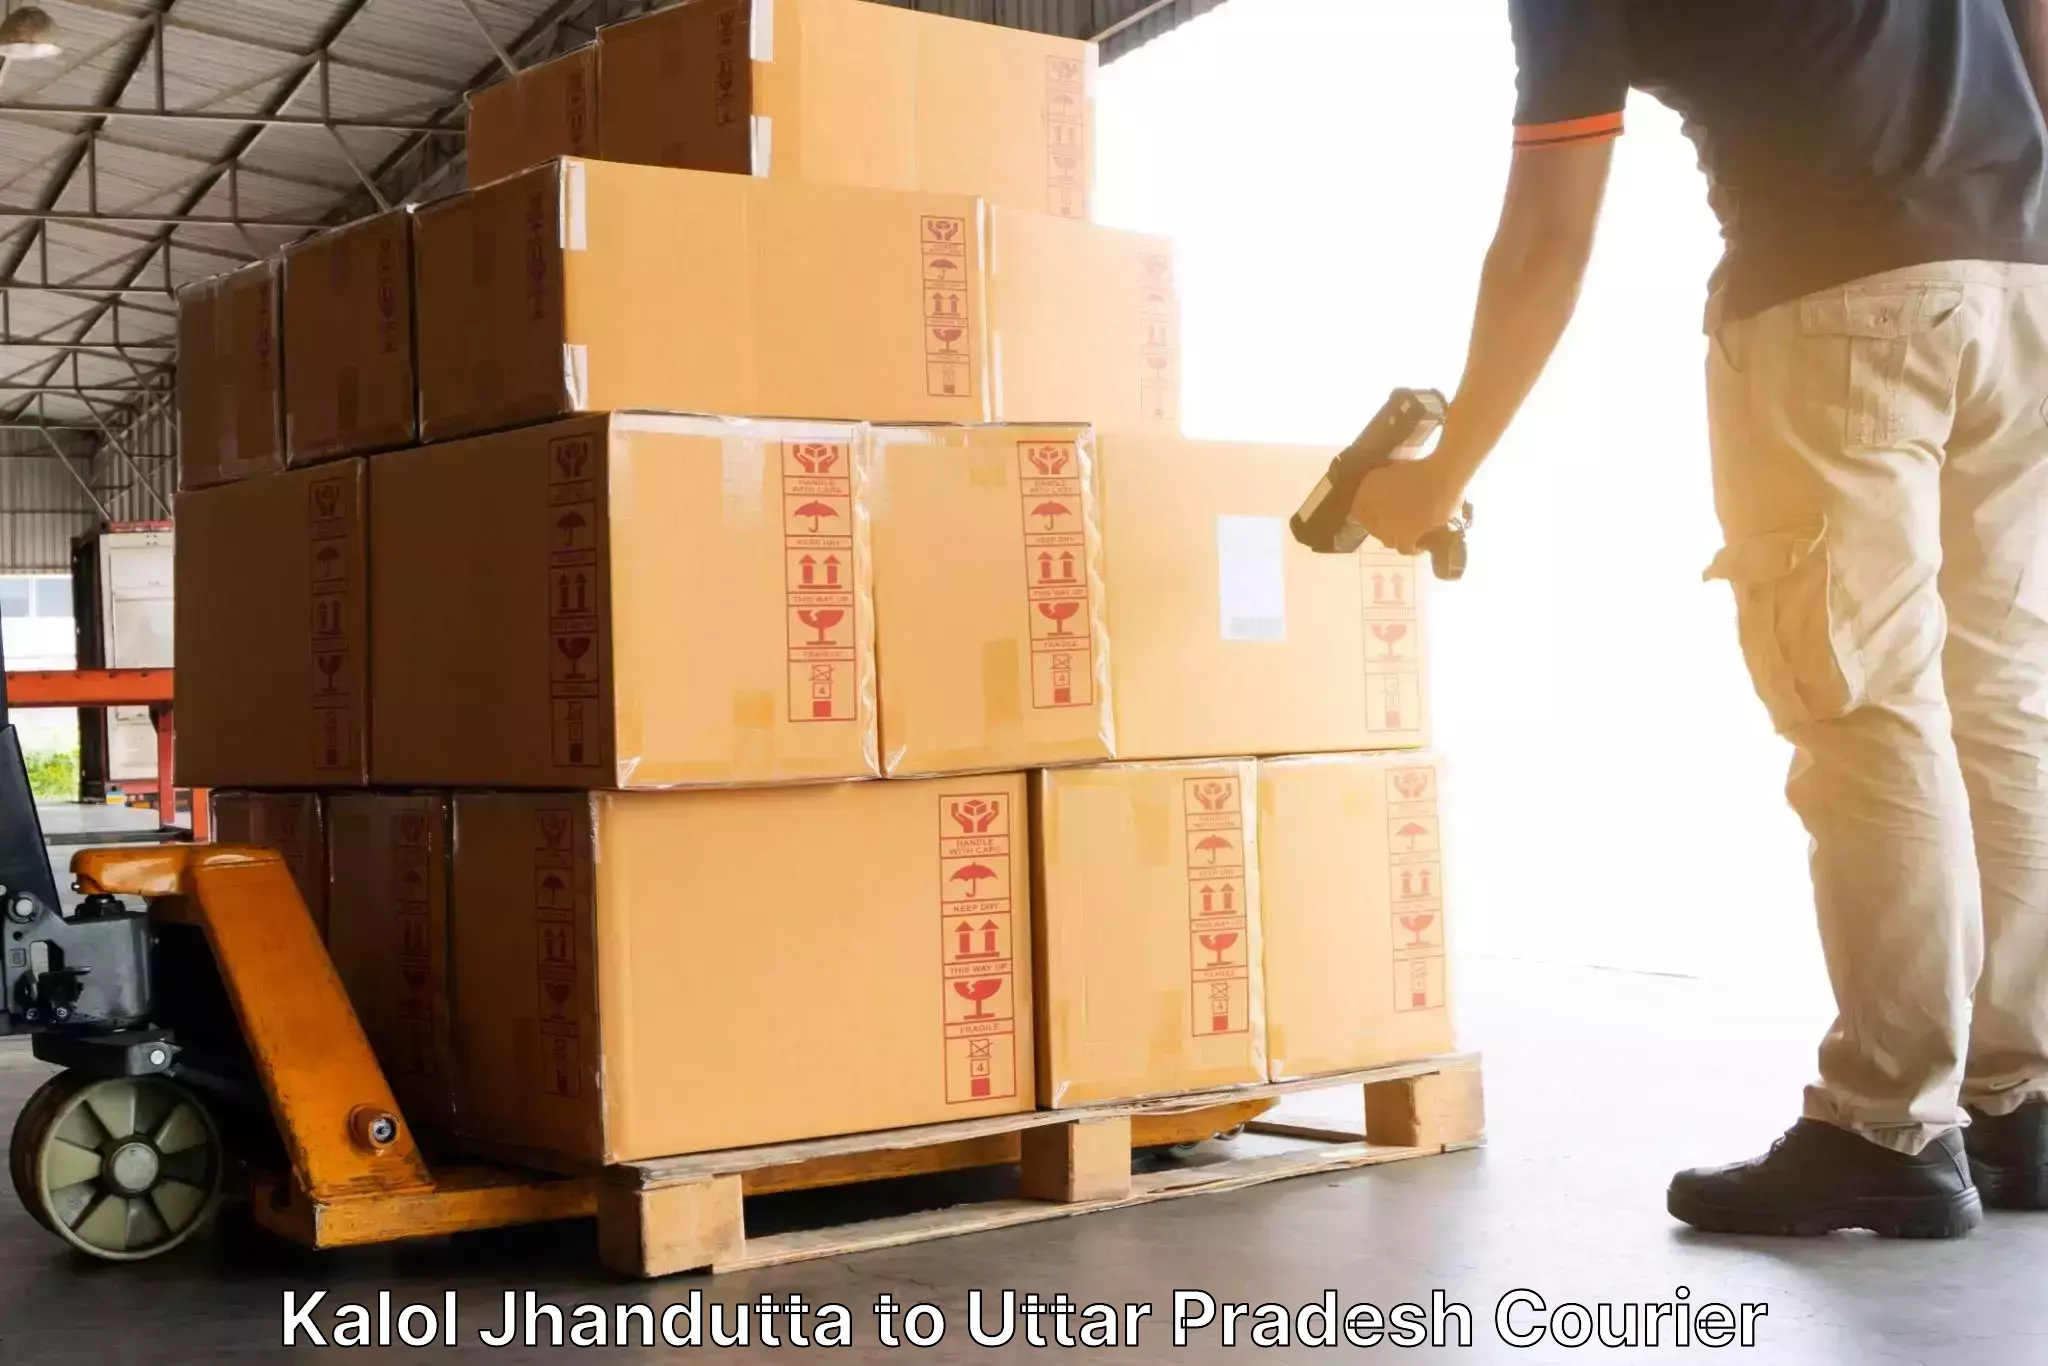 Courier services in Kalol Jhandutta to Akbarpur